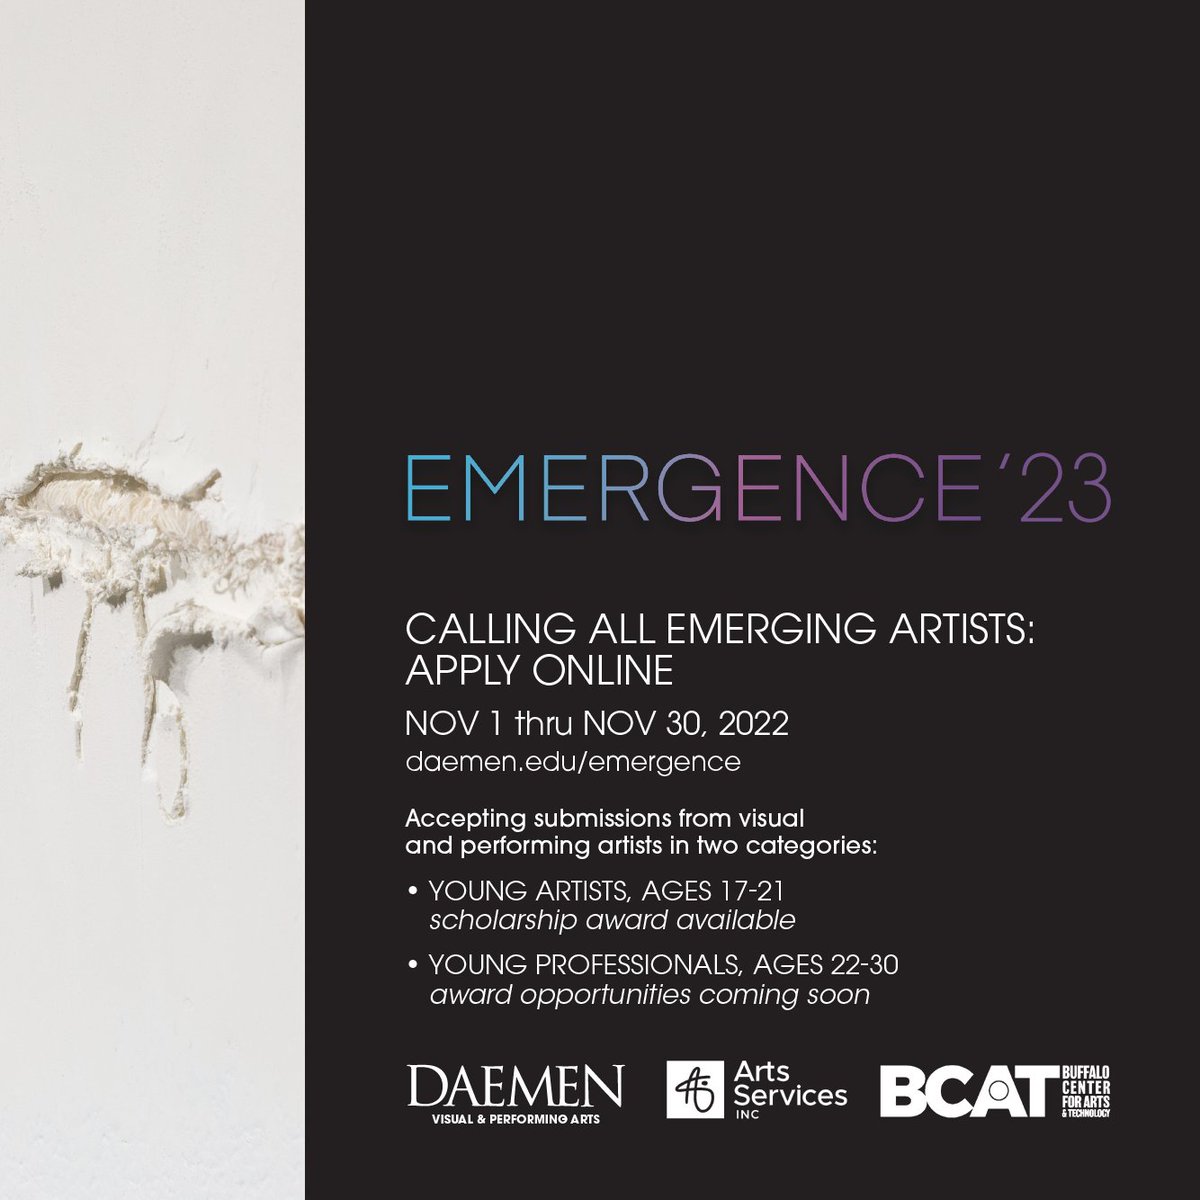 Applications are open for EMERGENCE '23! 
🎨 🎨 🎨 
daemen.edu/emergence
#emergingartist
#emergence23
#daemenvpa